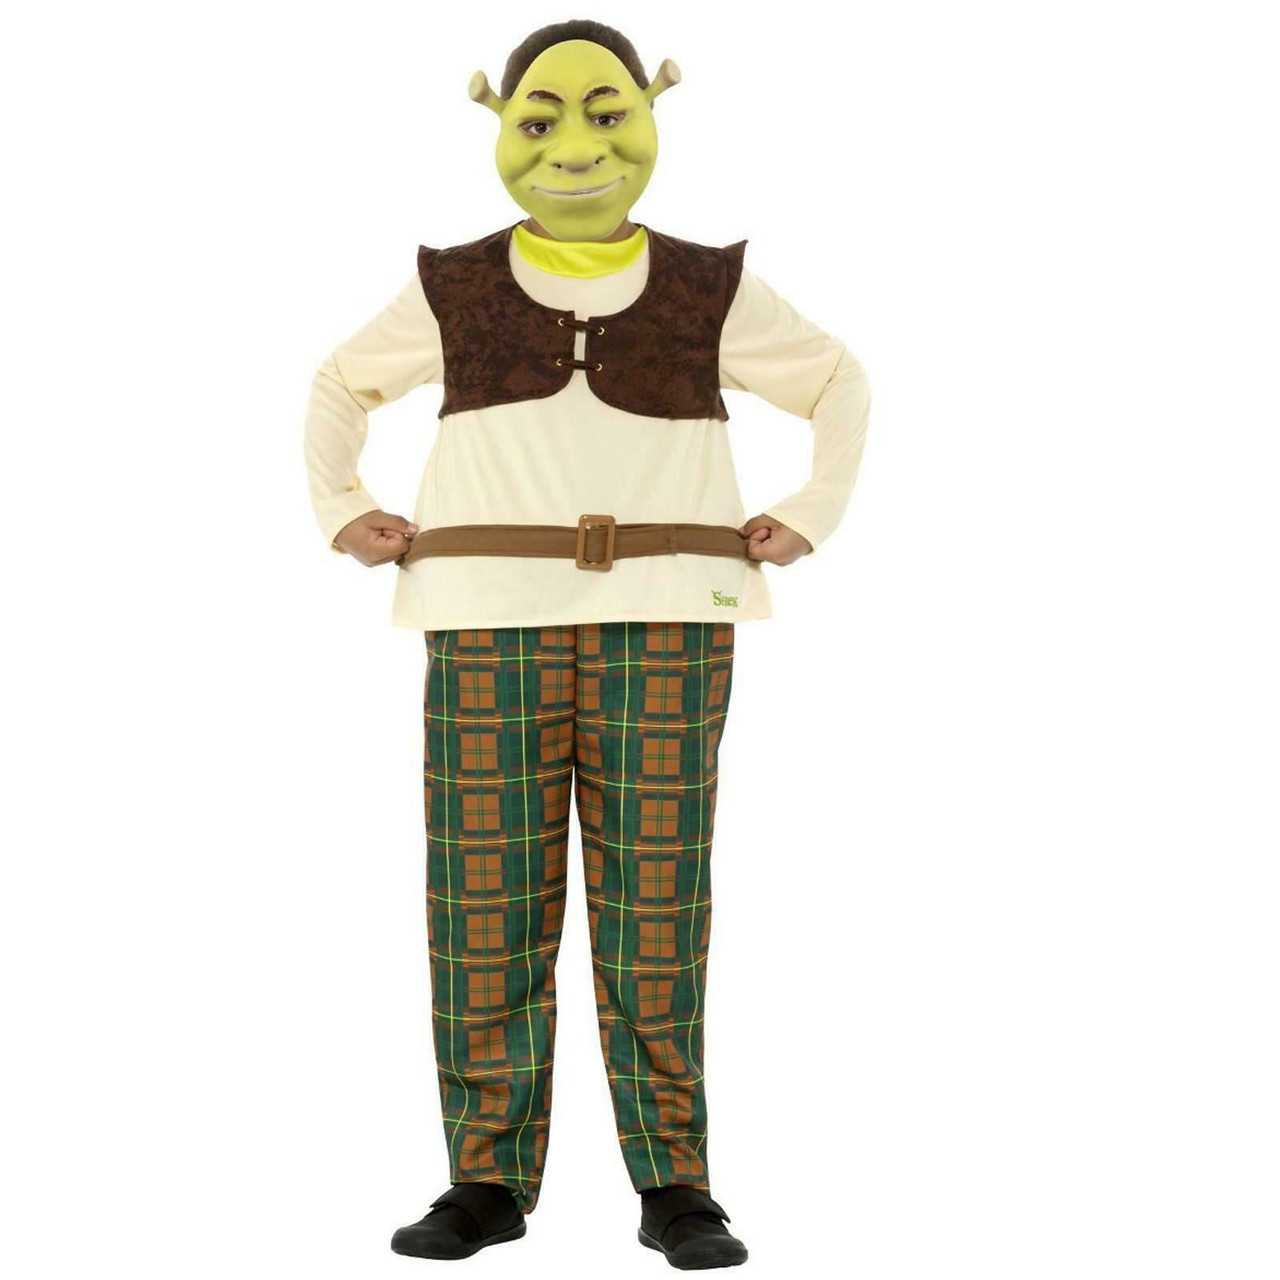 Official Deluxe Kids Shrek Book Day Fancy Dress Costume